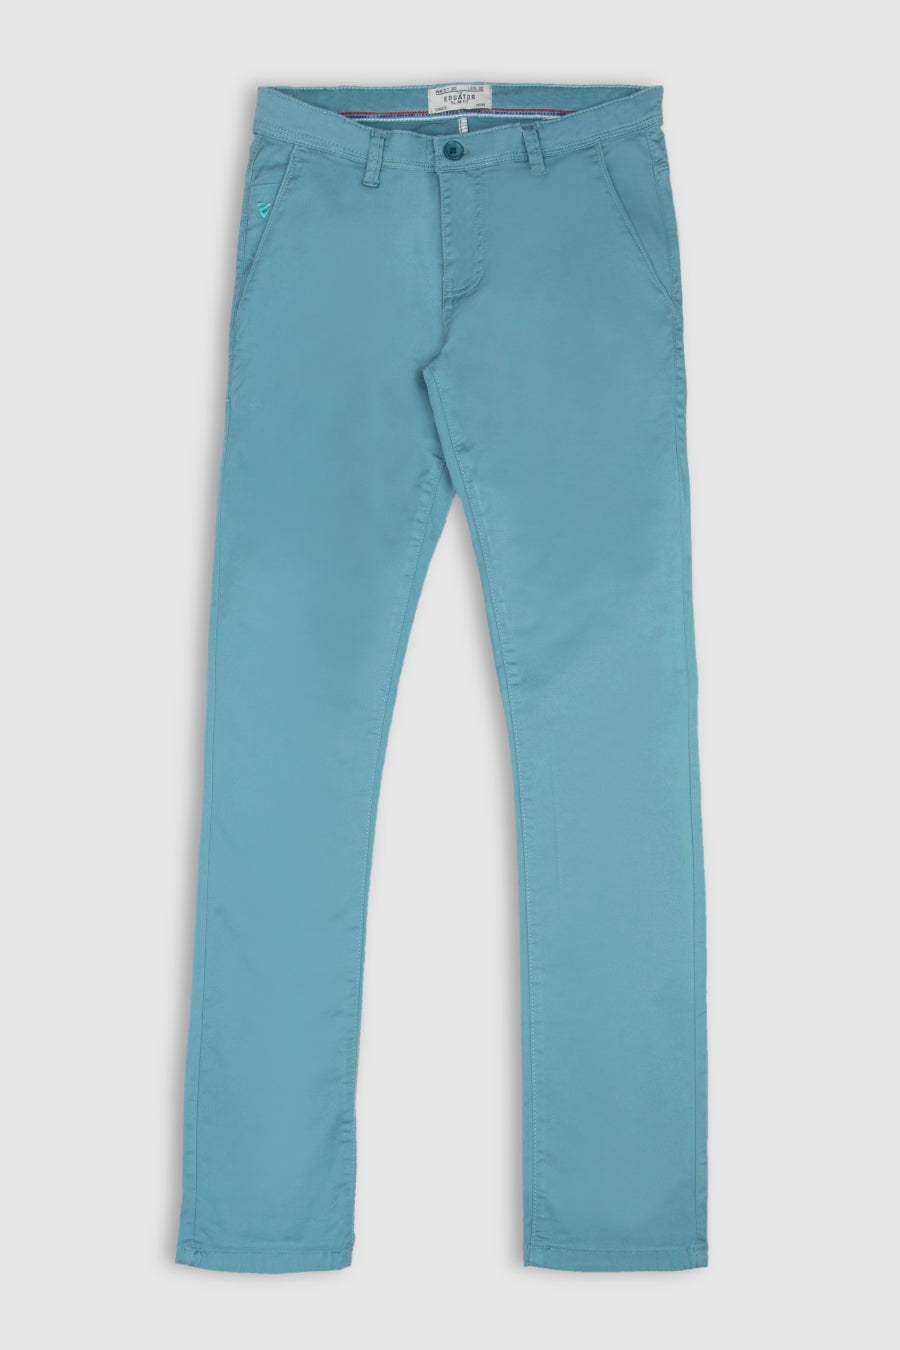 Mink Grey Chino Fashion Pants